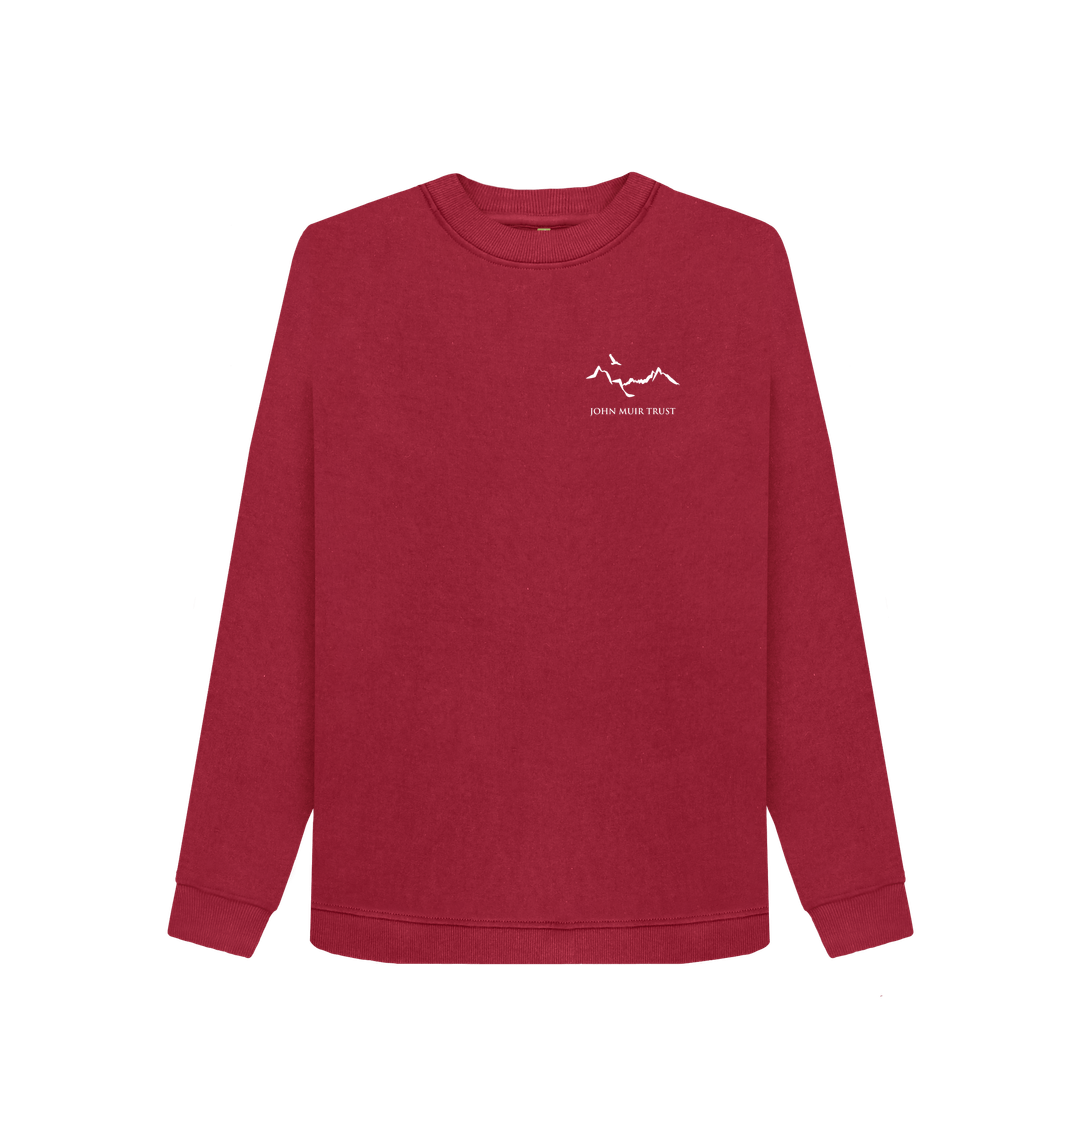 Cherry Lahar Bheinn Woman's Sweater